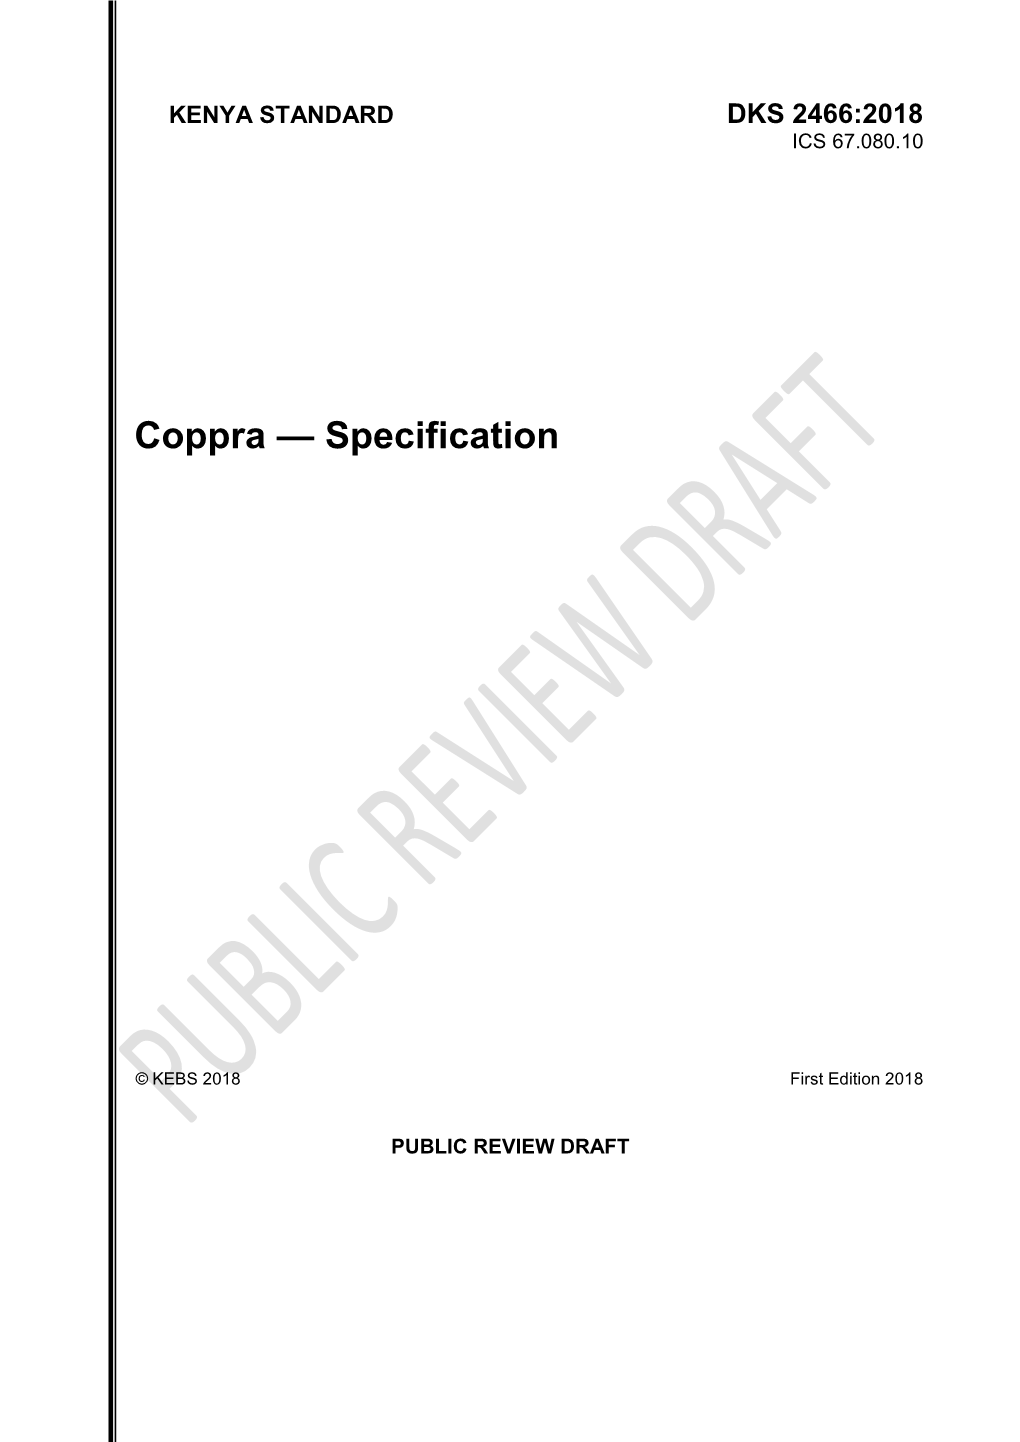 Coppra — Specification